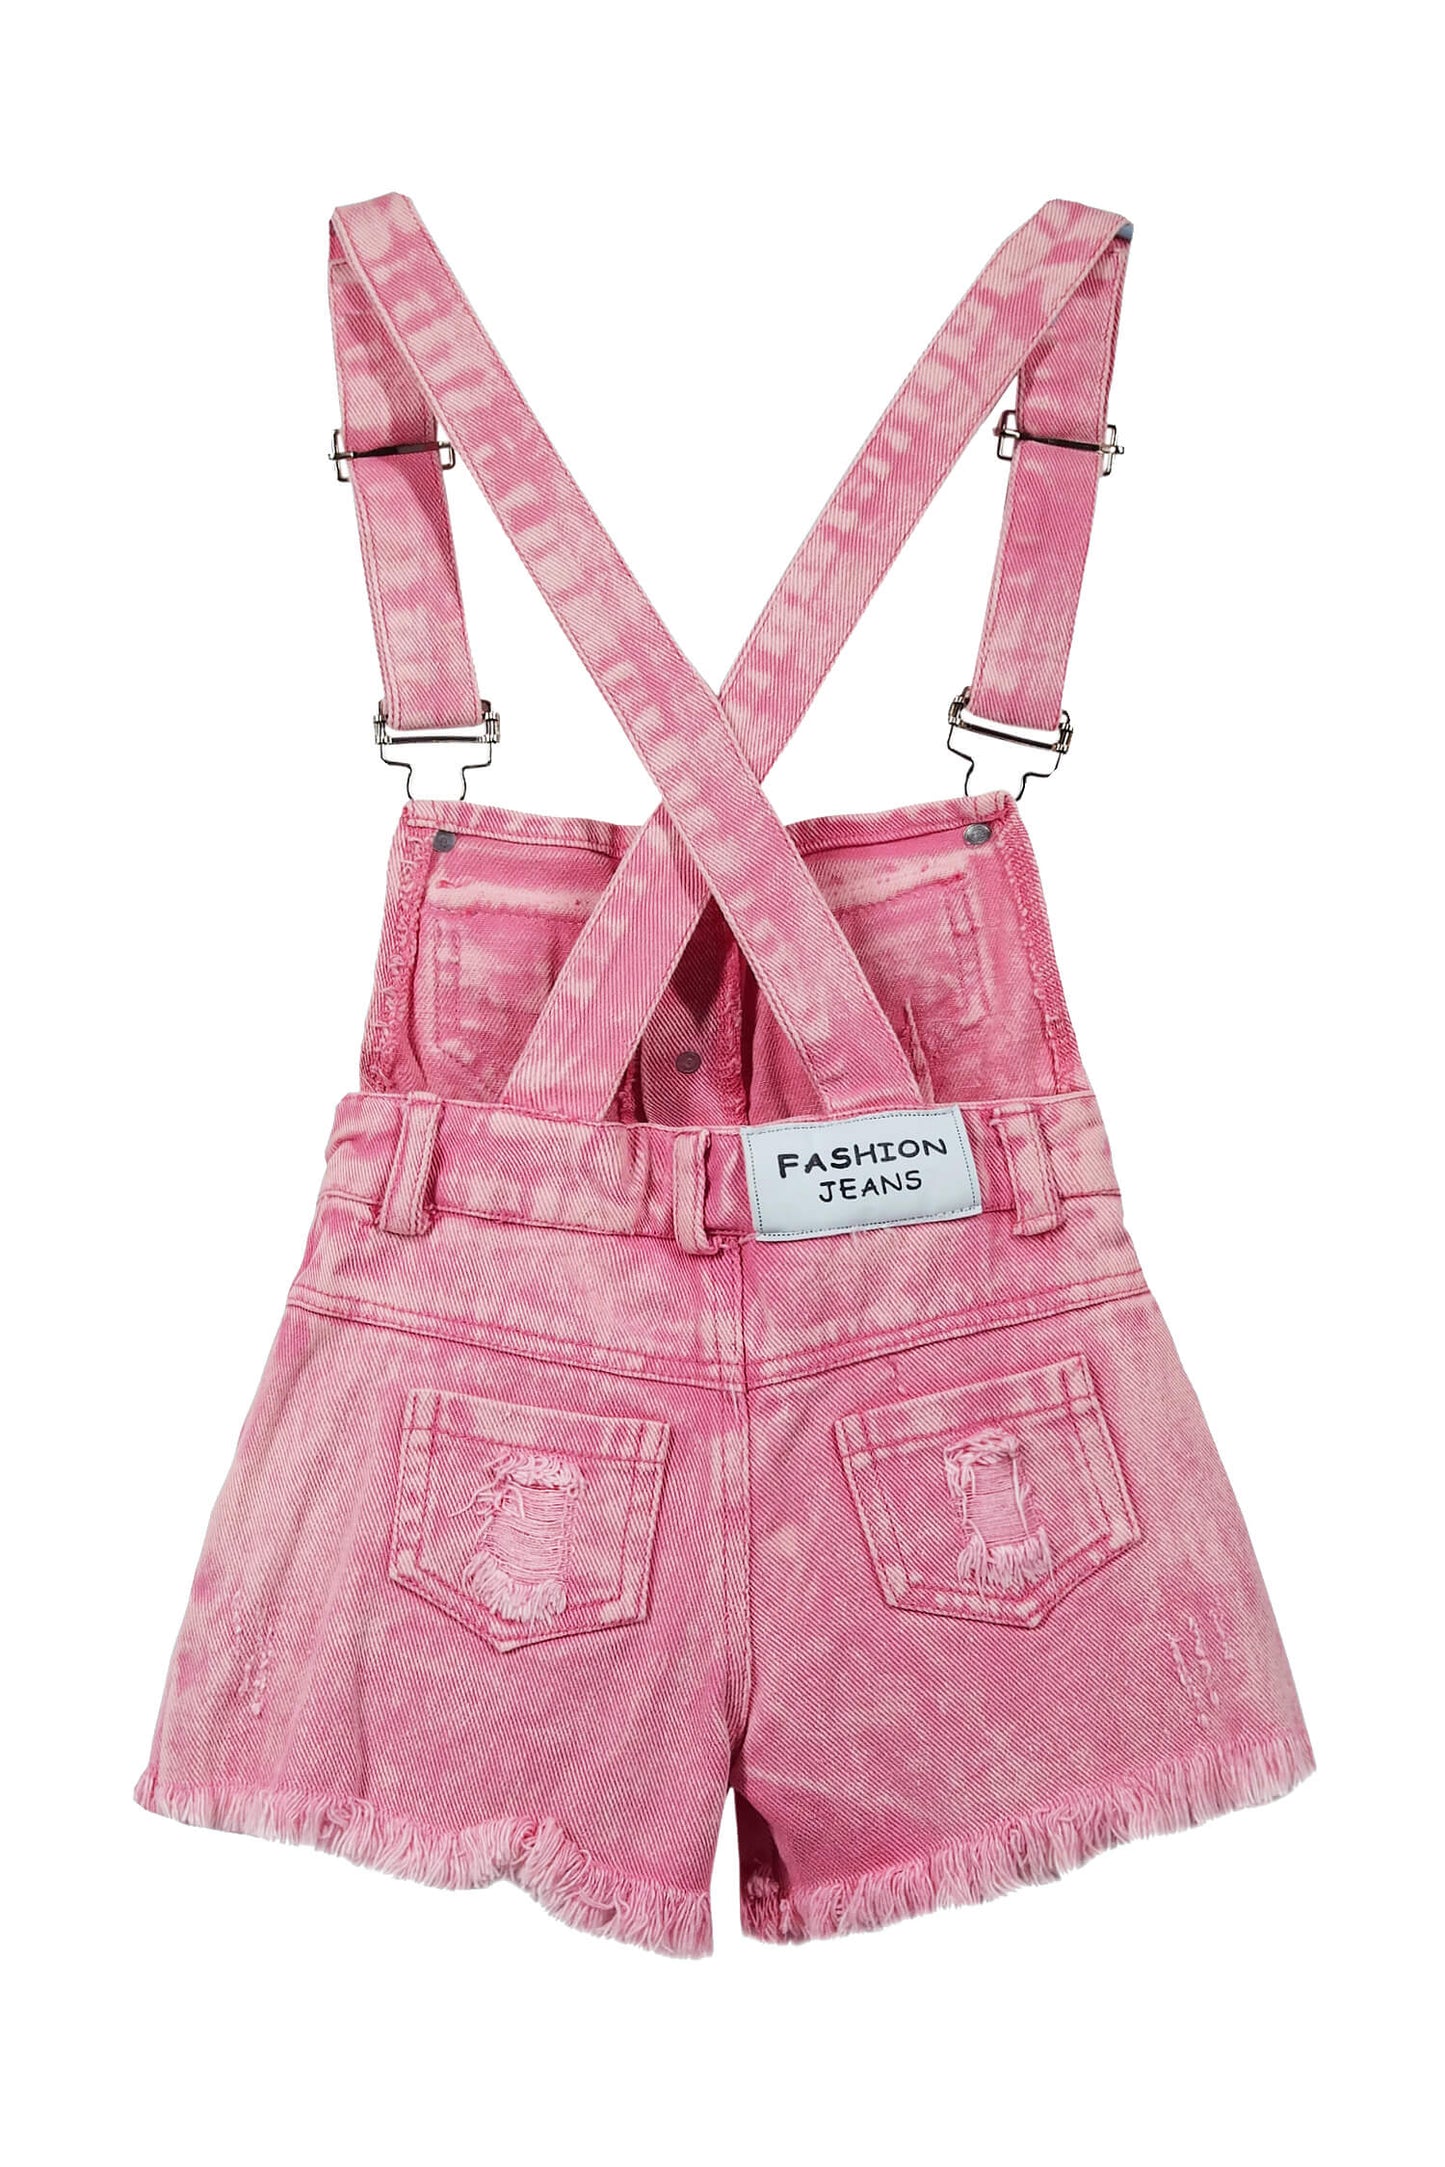 Stylish Pink Kids Denim Overalls Shortalls